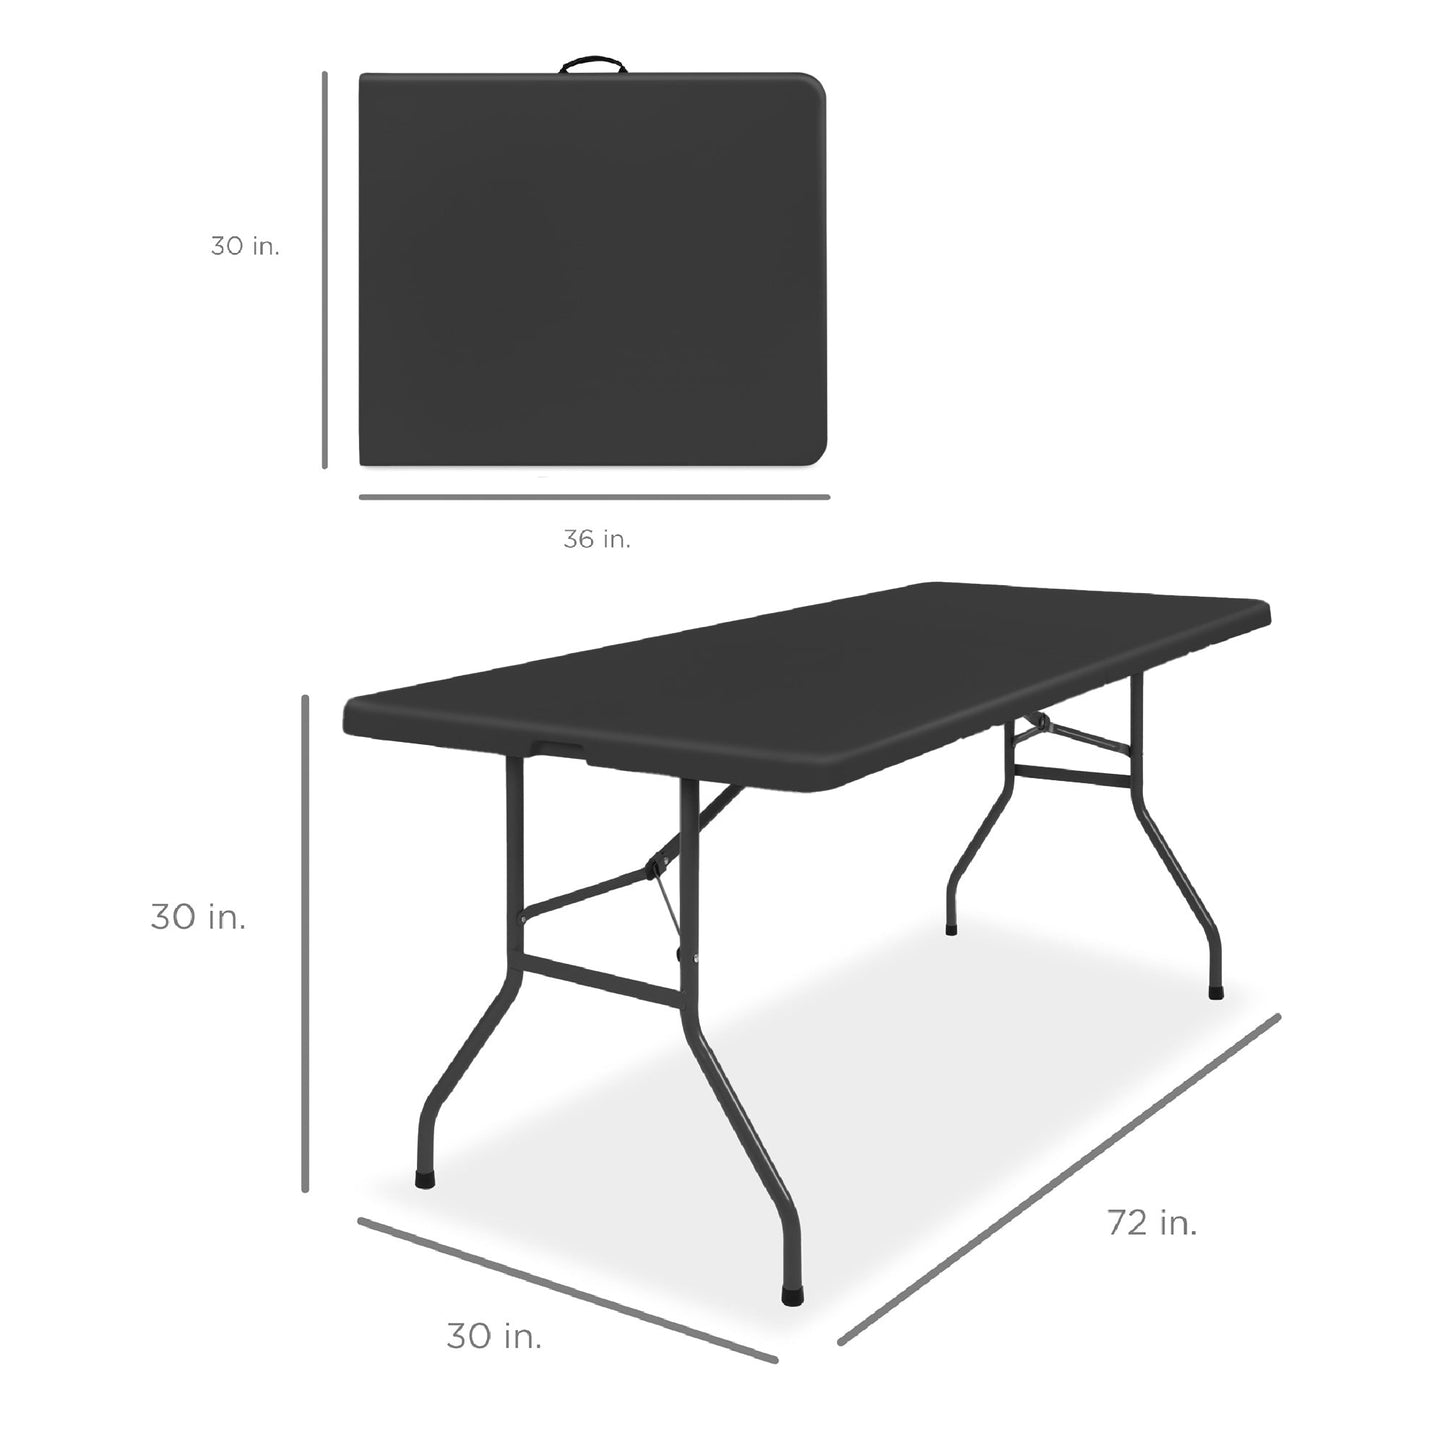 Portable Folding Plastic Dining Table w/ Handle, Lock - 6ft